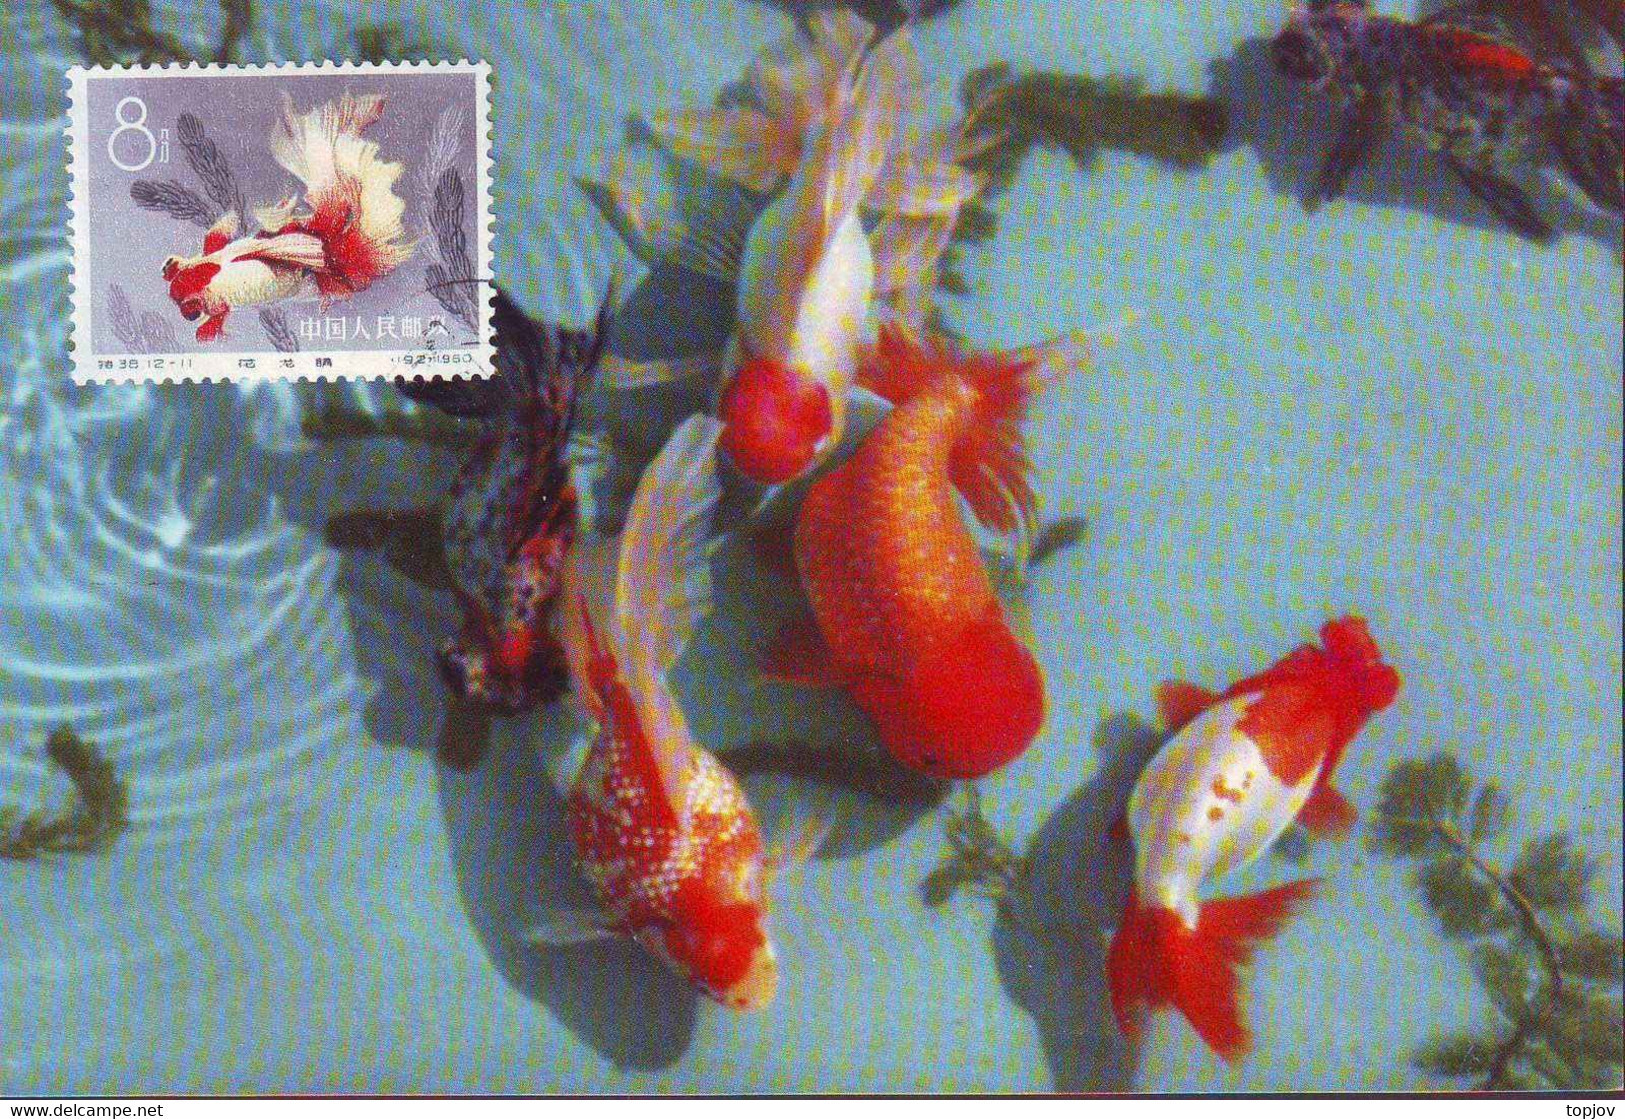 CHINA - KINA -  GOLD  FISH  on  POSTCARDS - complet set 12 v -  ORGINAL  CARD - cto  MC - 1960 - PERFECT - RARE